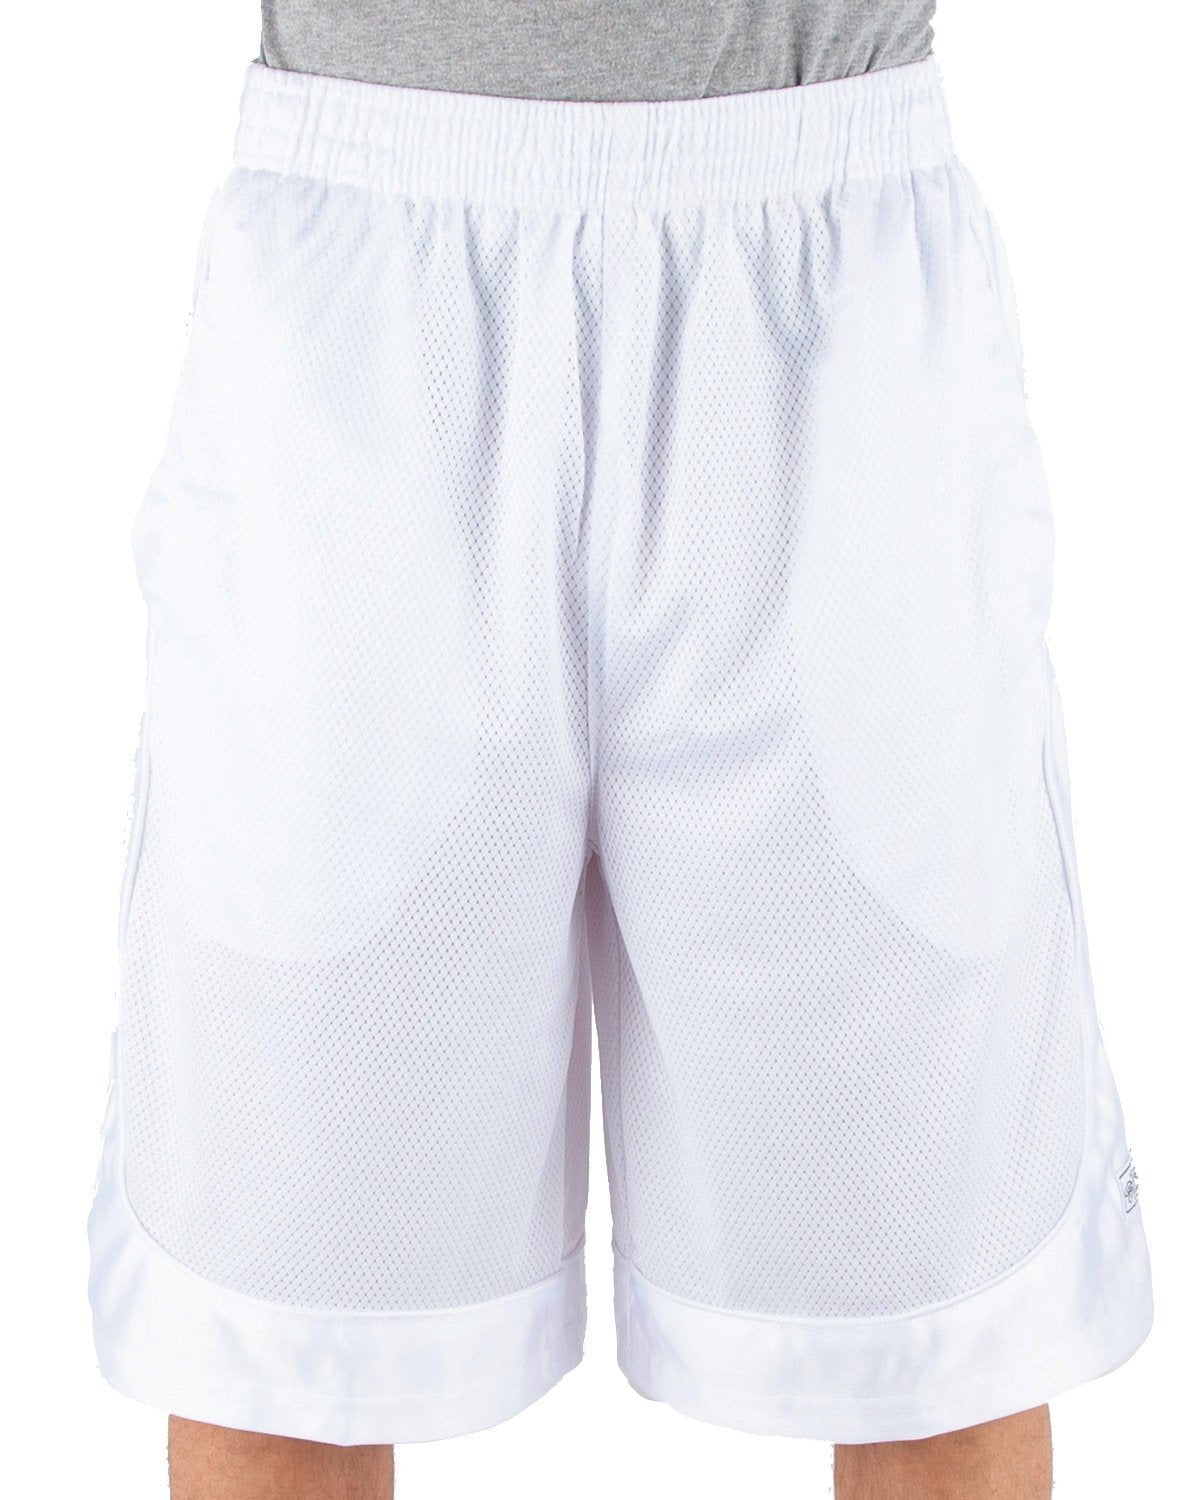 Mesh Shorts XL / White